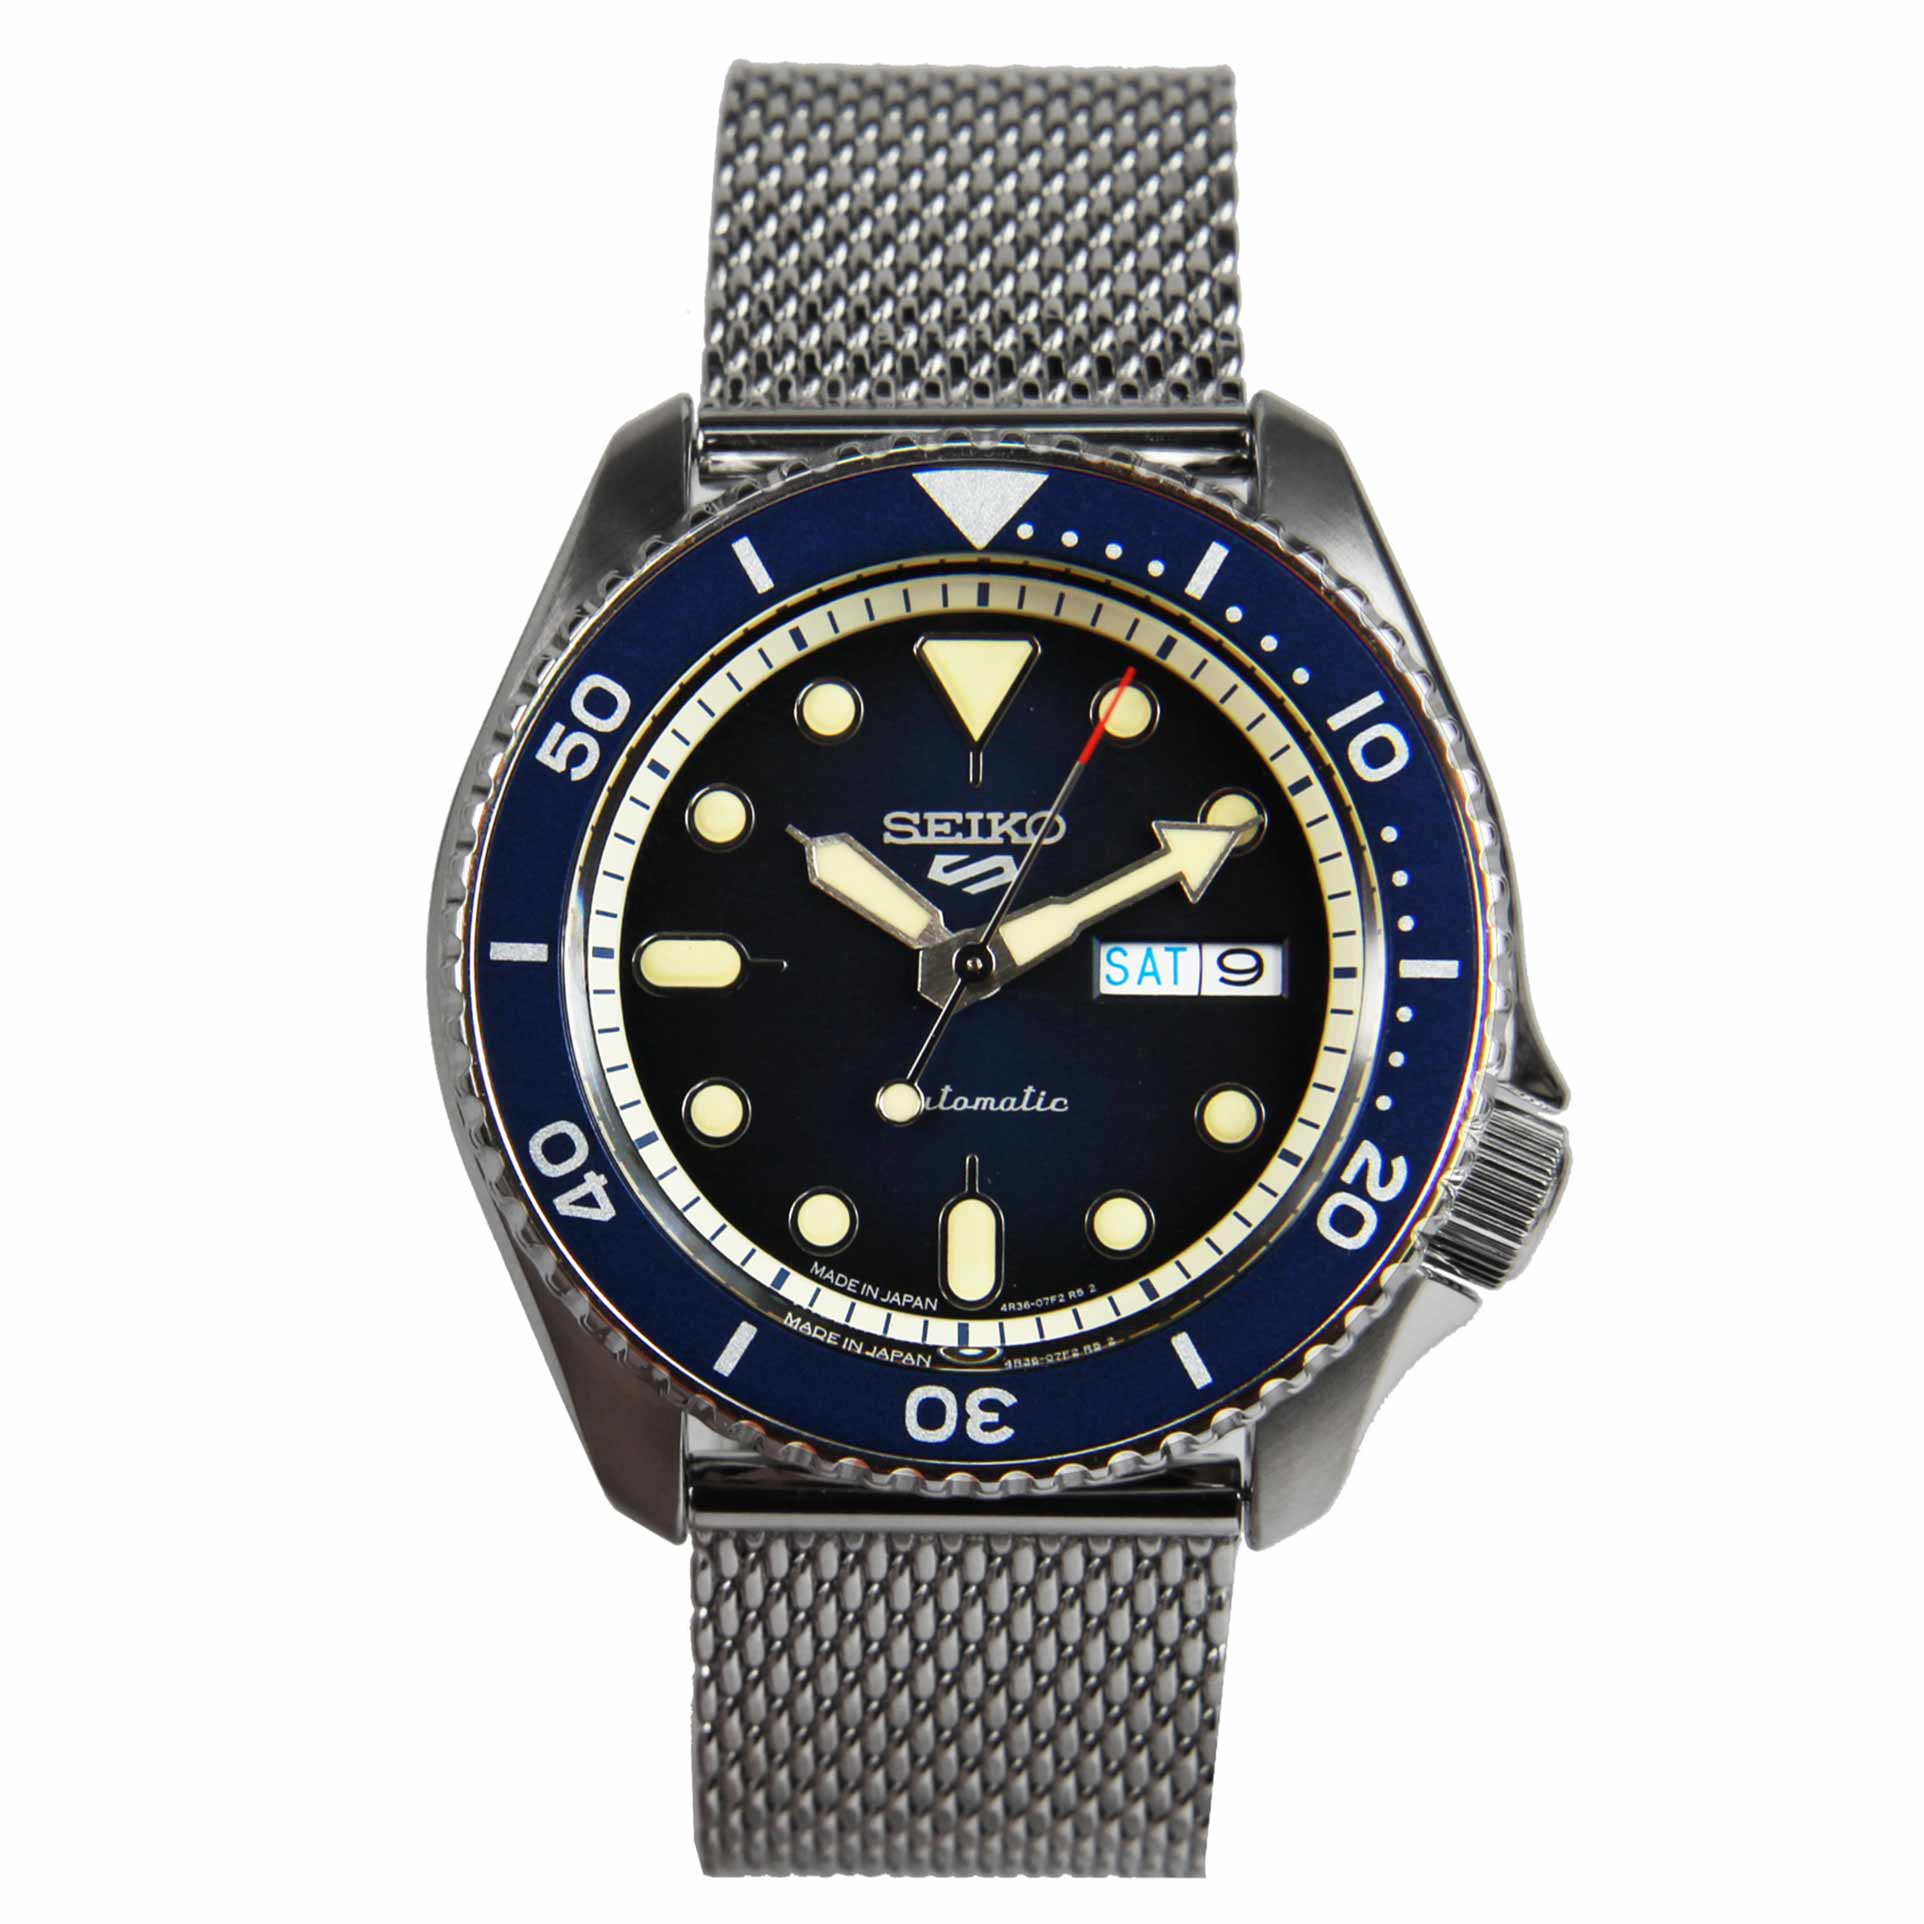 Seiko JDM SBSA015 Mesh Stainless Steel Blue Dial Watch -Seiko